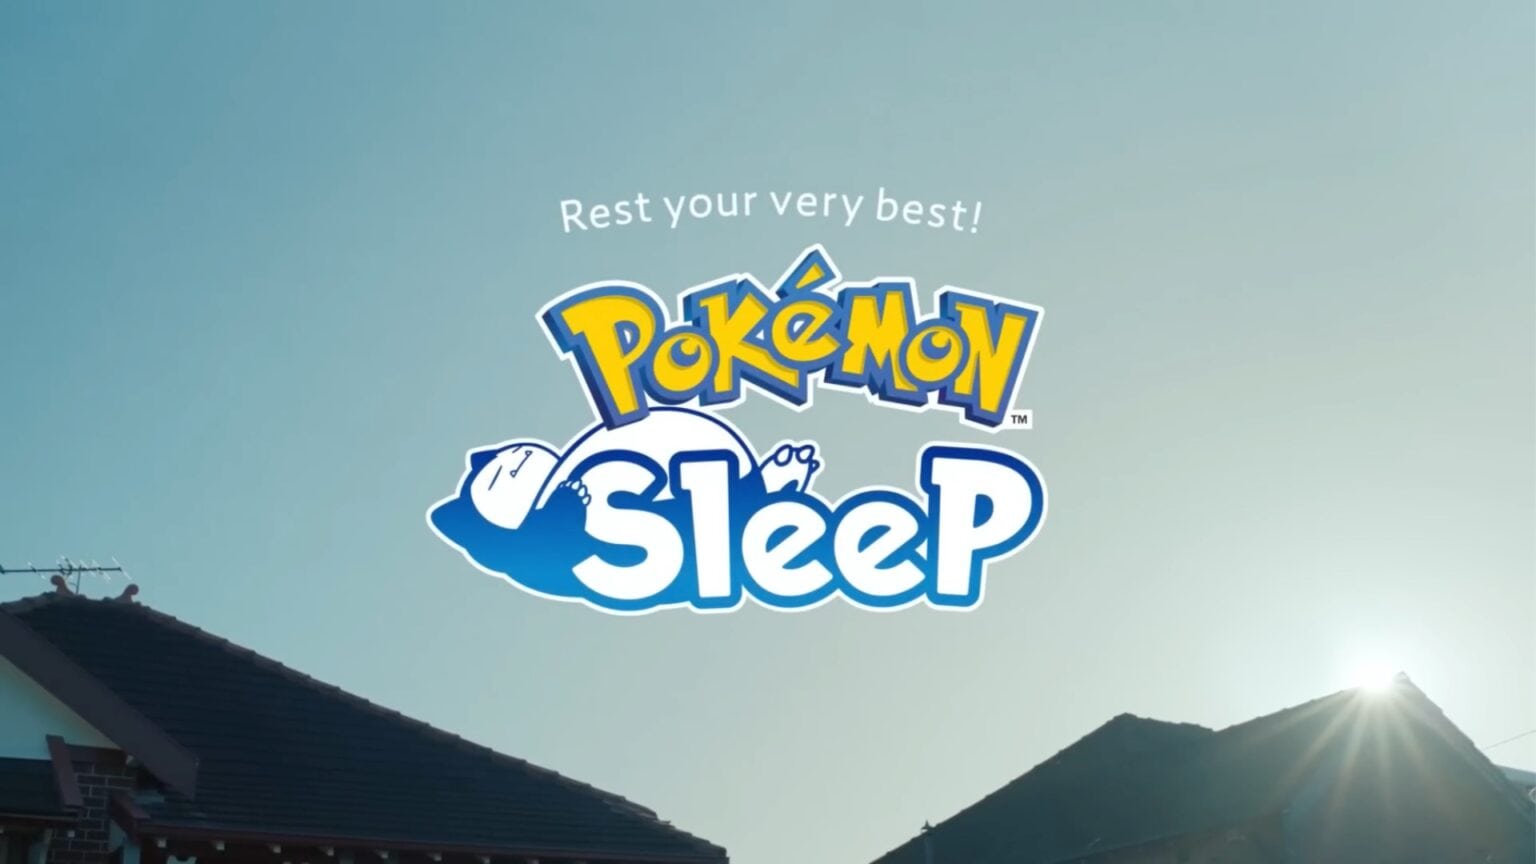 Rest your very best! Pokémon Sleep.